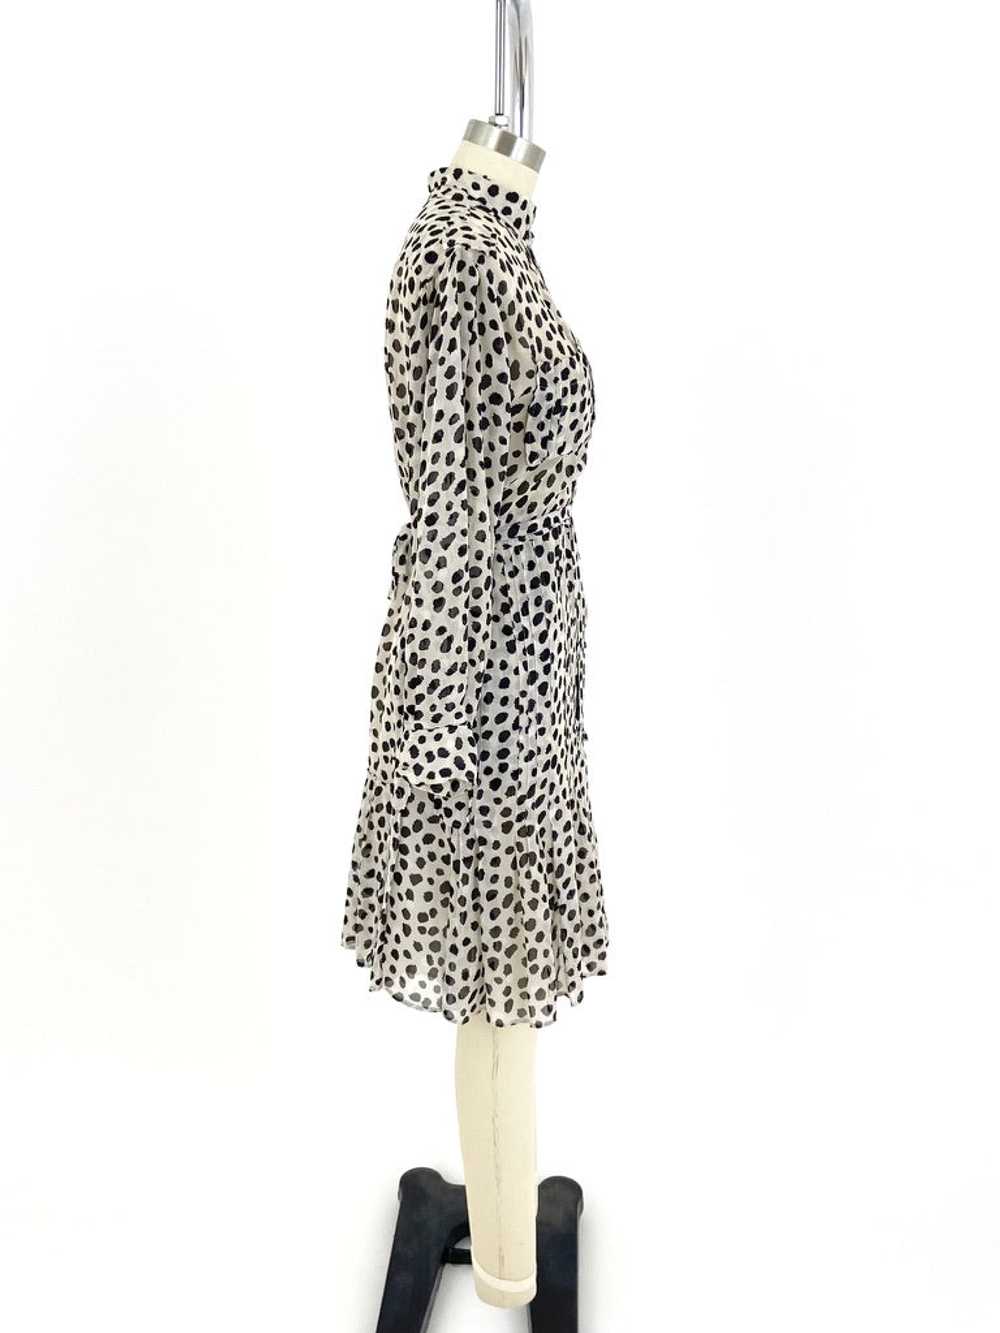 Yves Saint Laurent Silk Chiffon Printed Dress - image 3